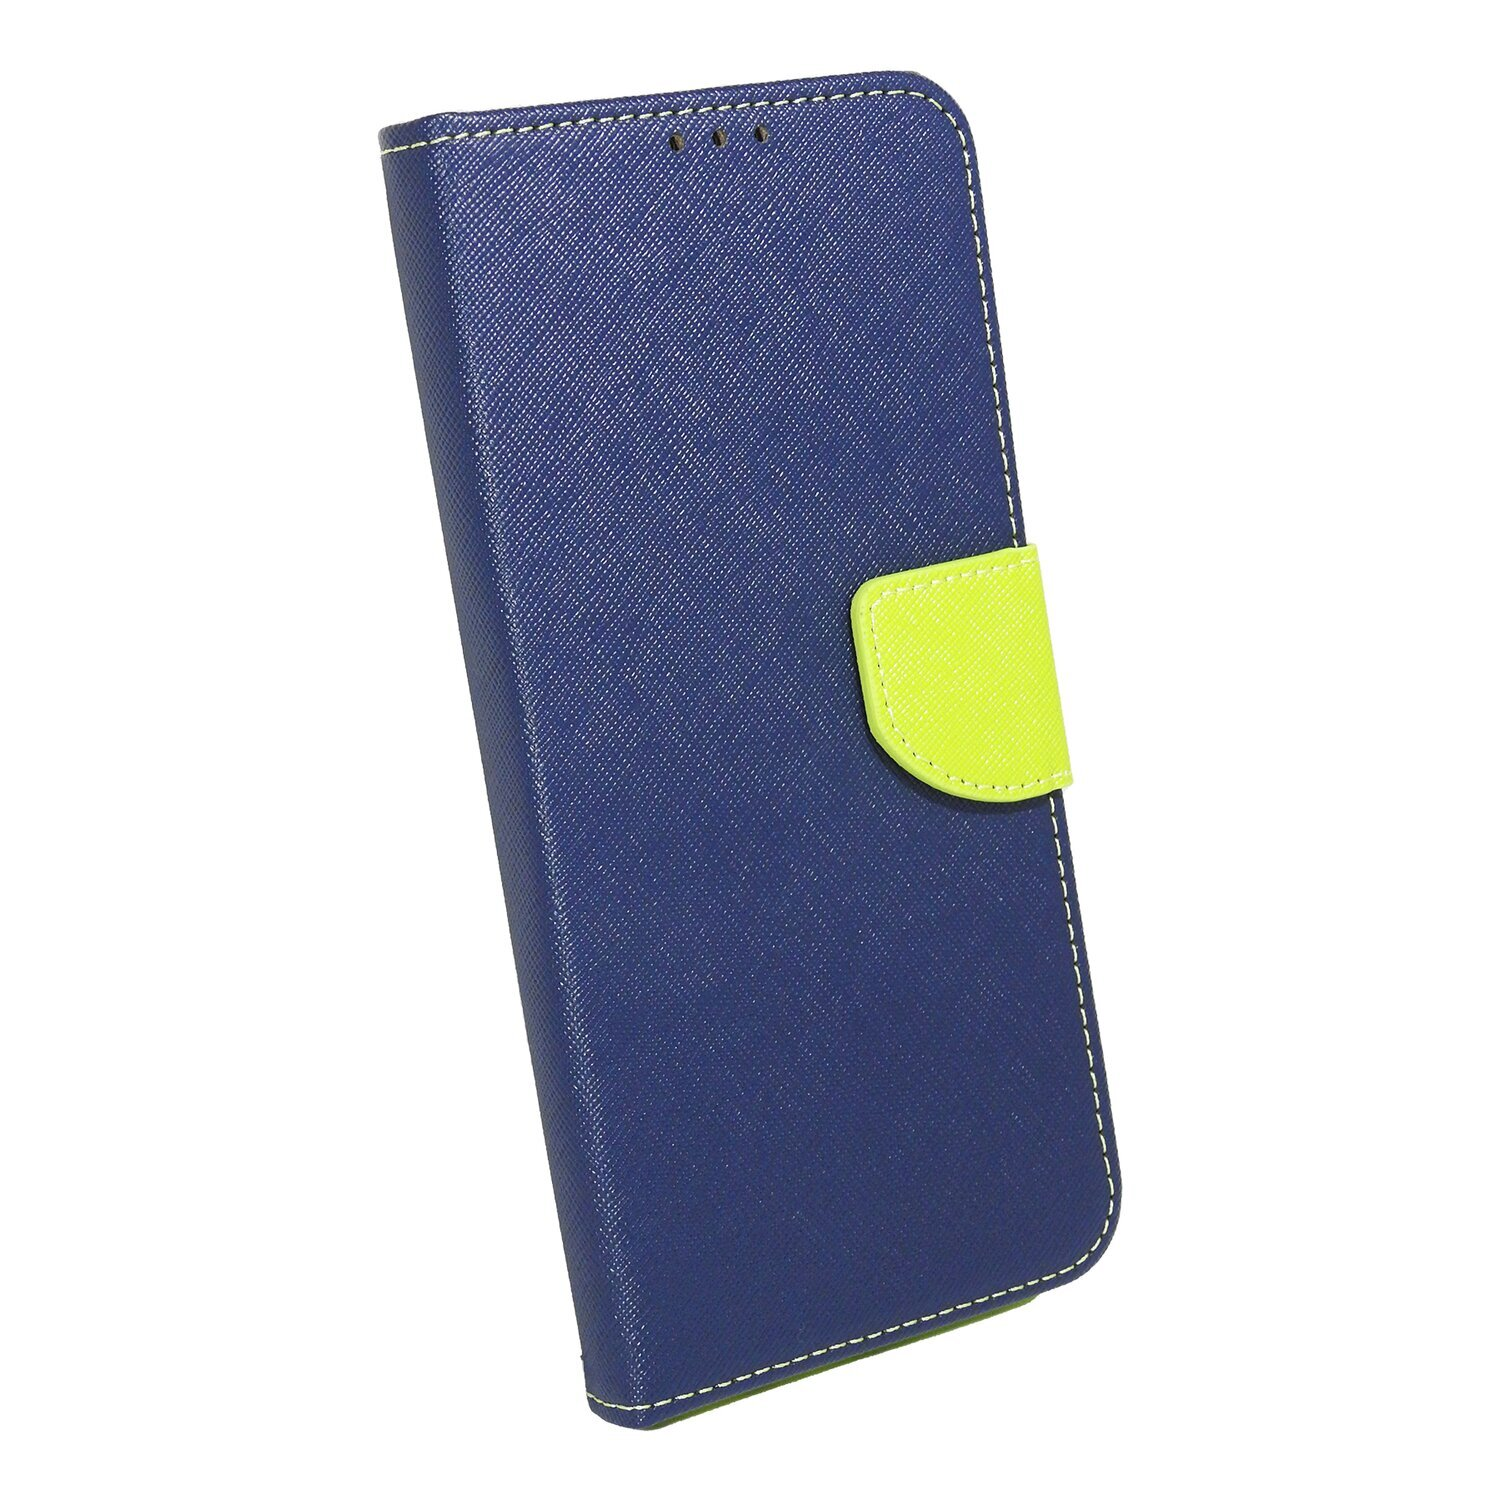 5G, Moto G Buch Bookcover, Tasche, Blau-Grün COFI Motorola,